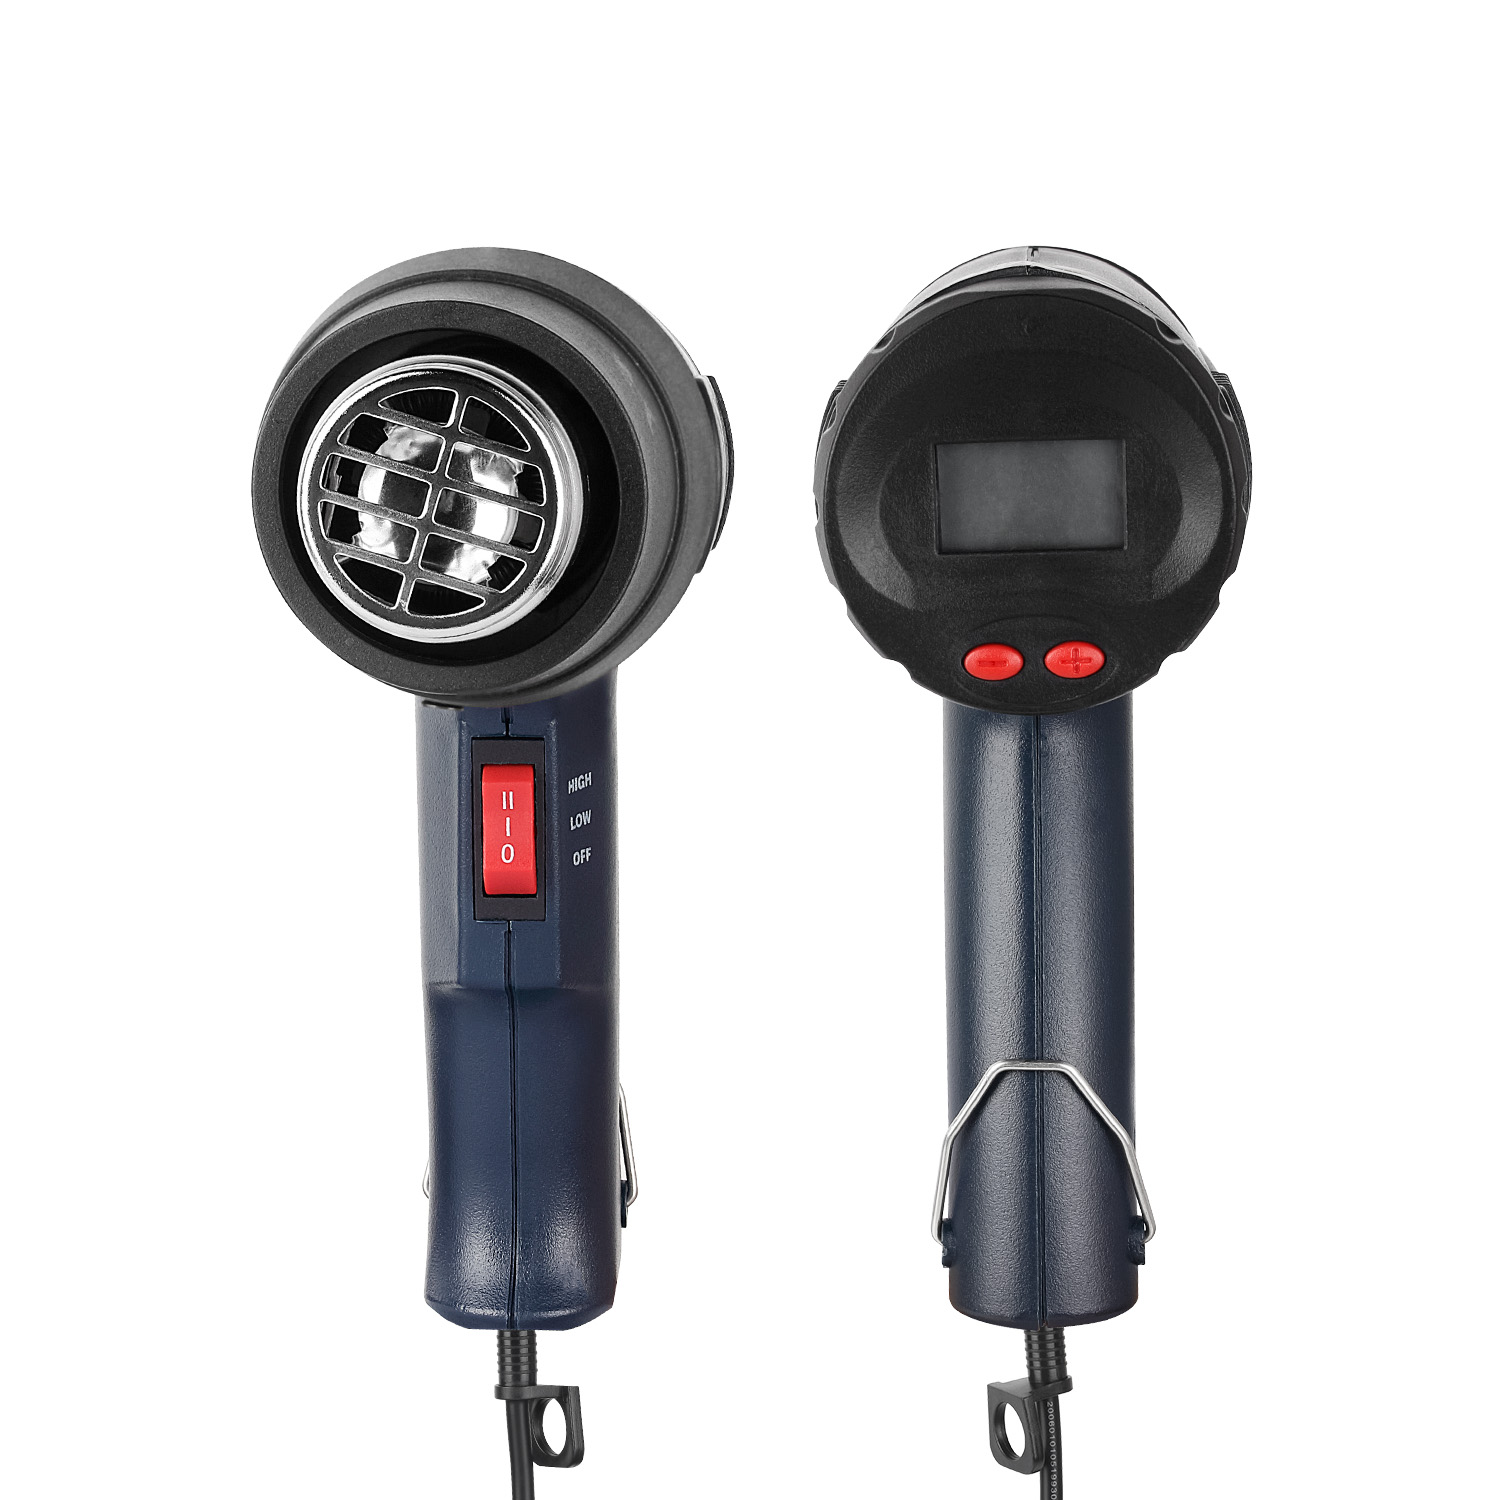 882 Electric Digital Display Hot Air Gun Temperature-controlled Building Hair dryer Heat gun Soldering Tools Adjustable+3Nozzle